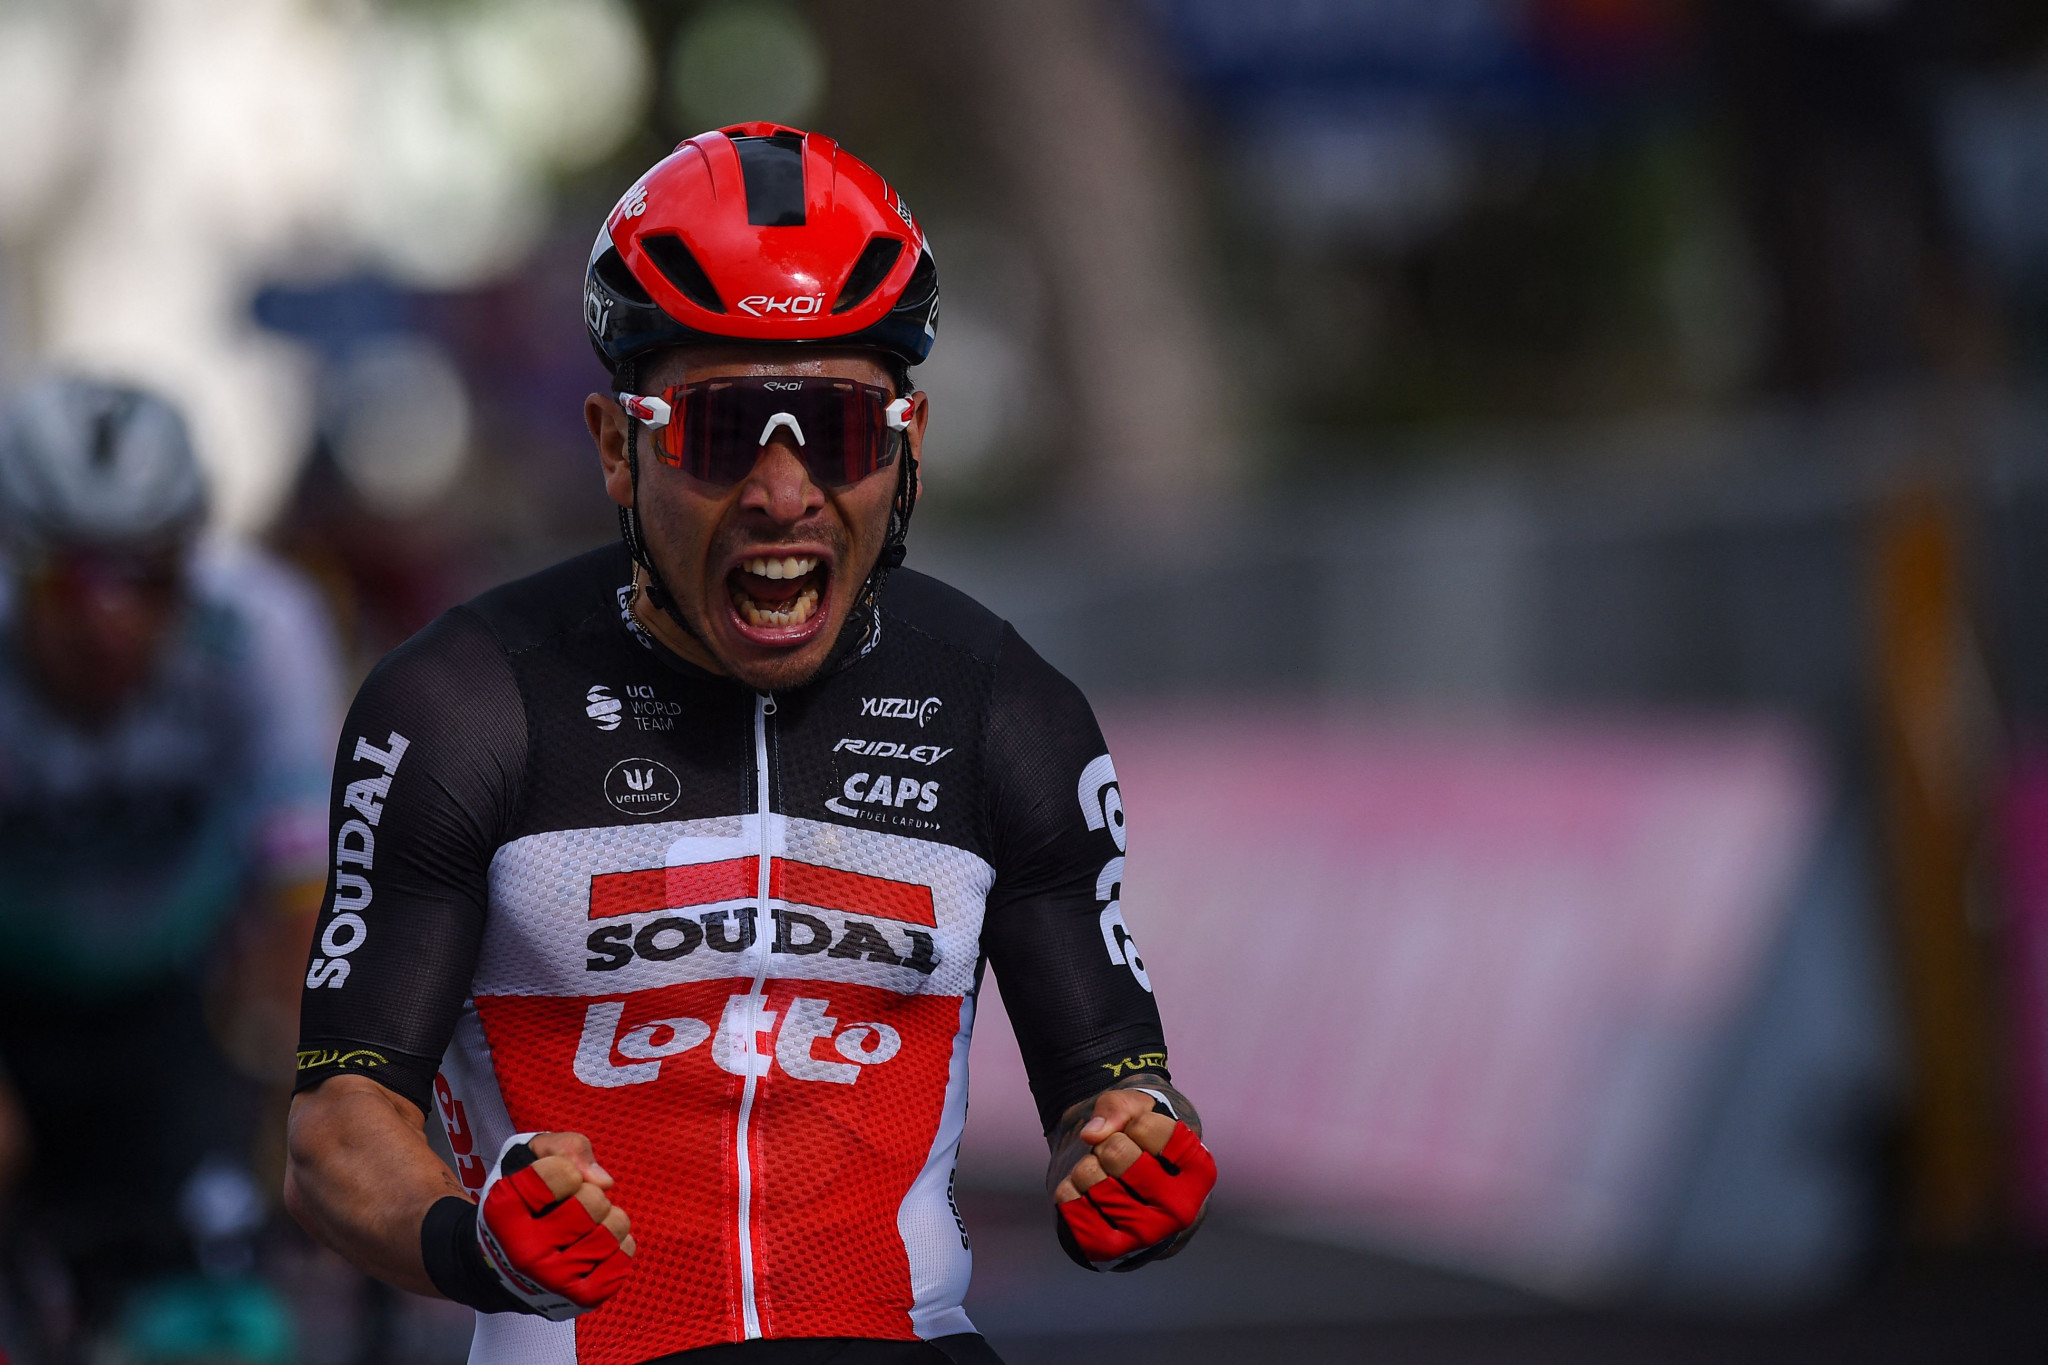 Ewan wins stage five as Landa and Sivakov crash out of Giro d'Italia